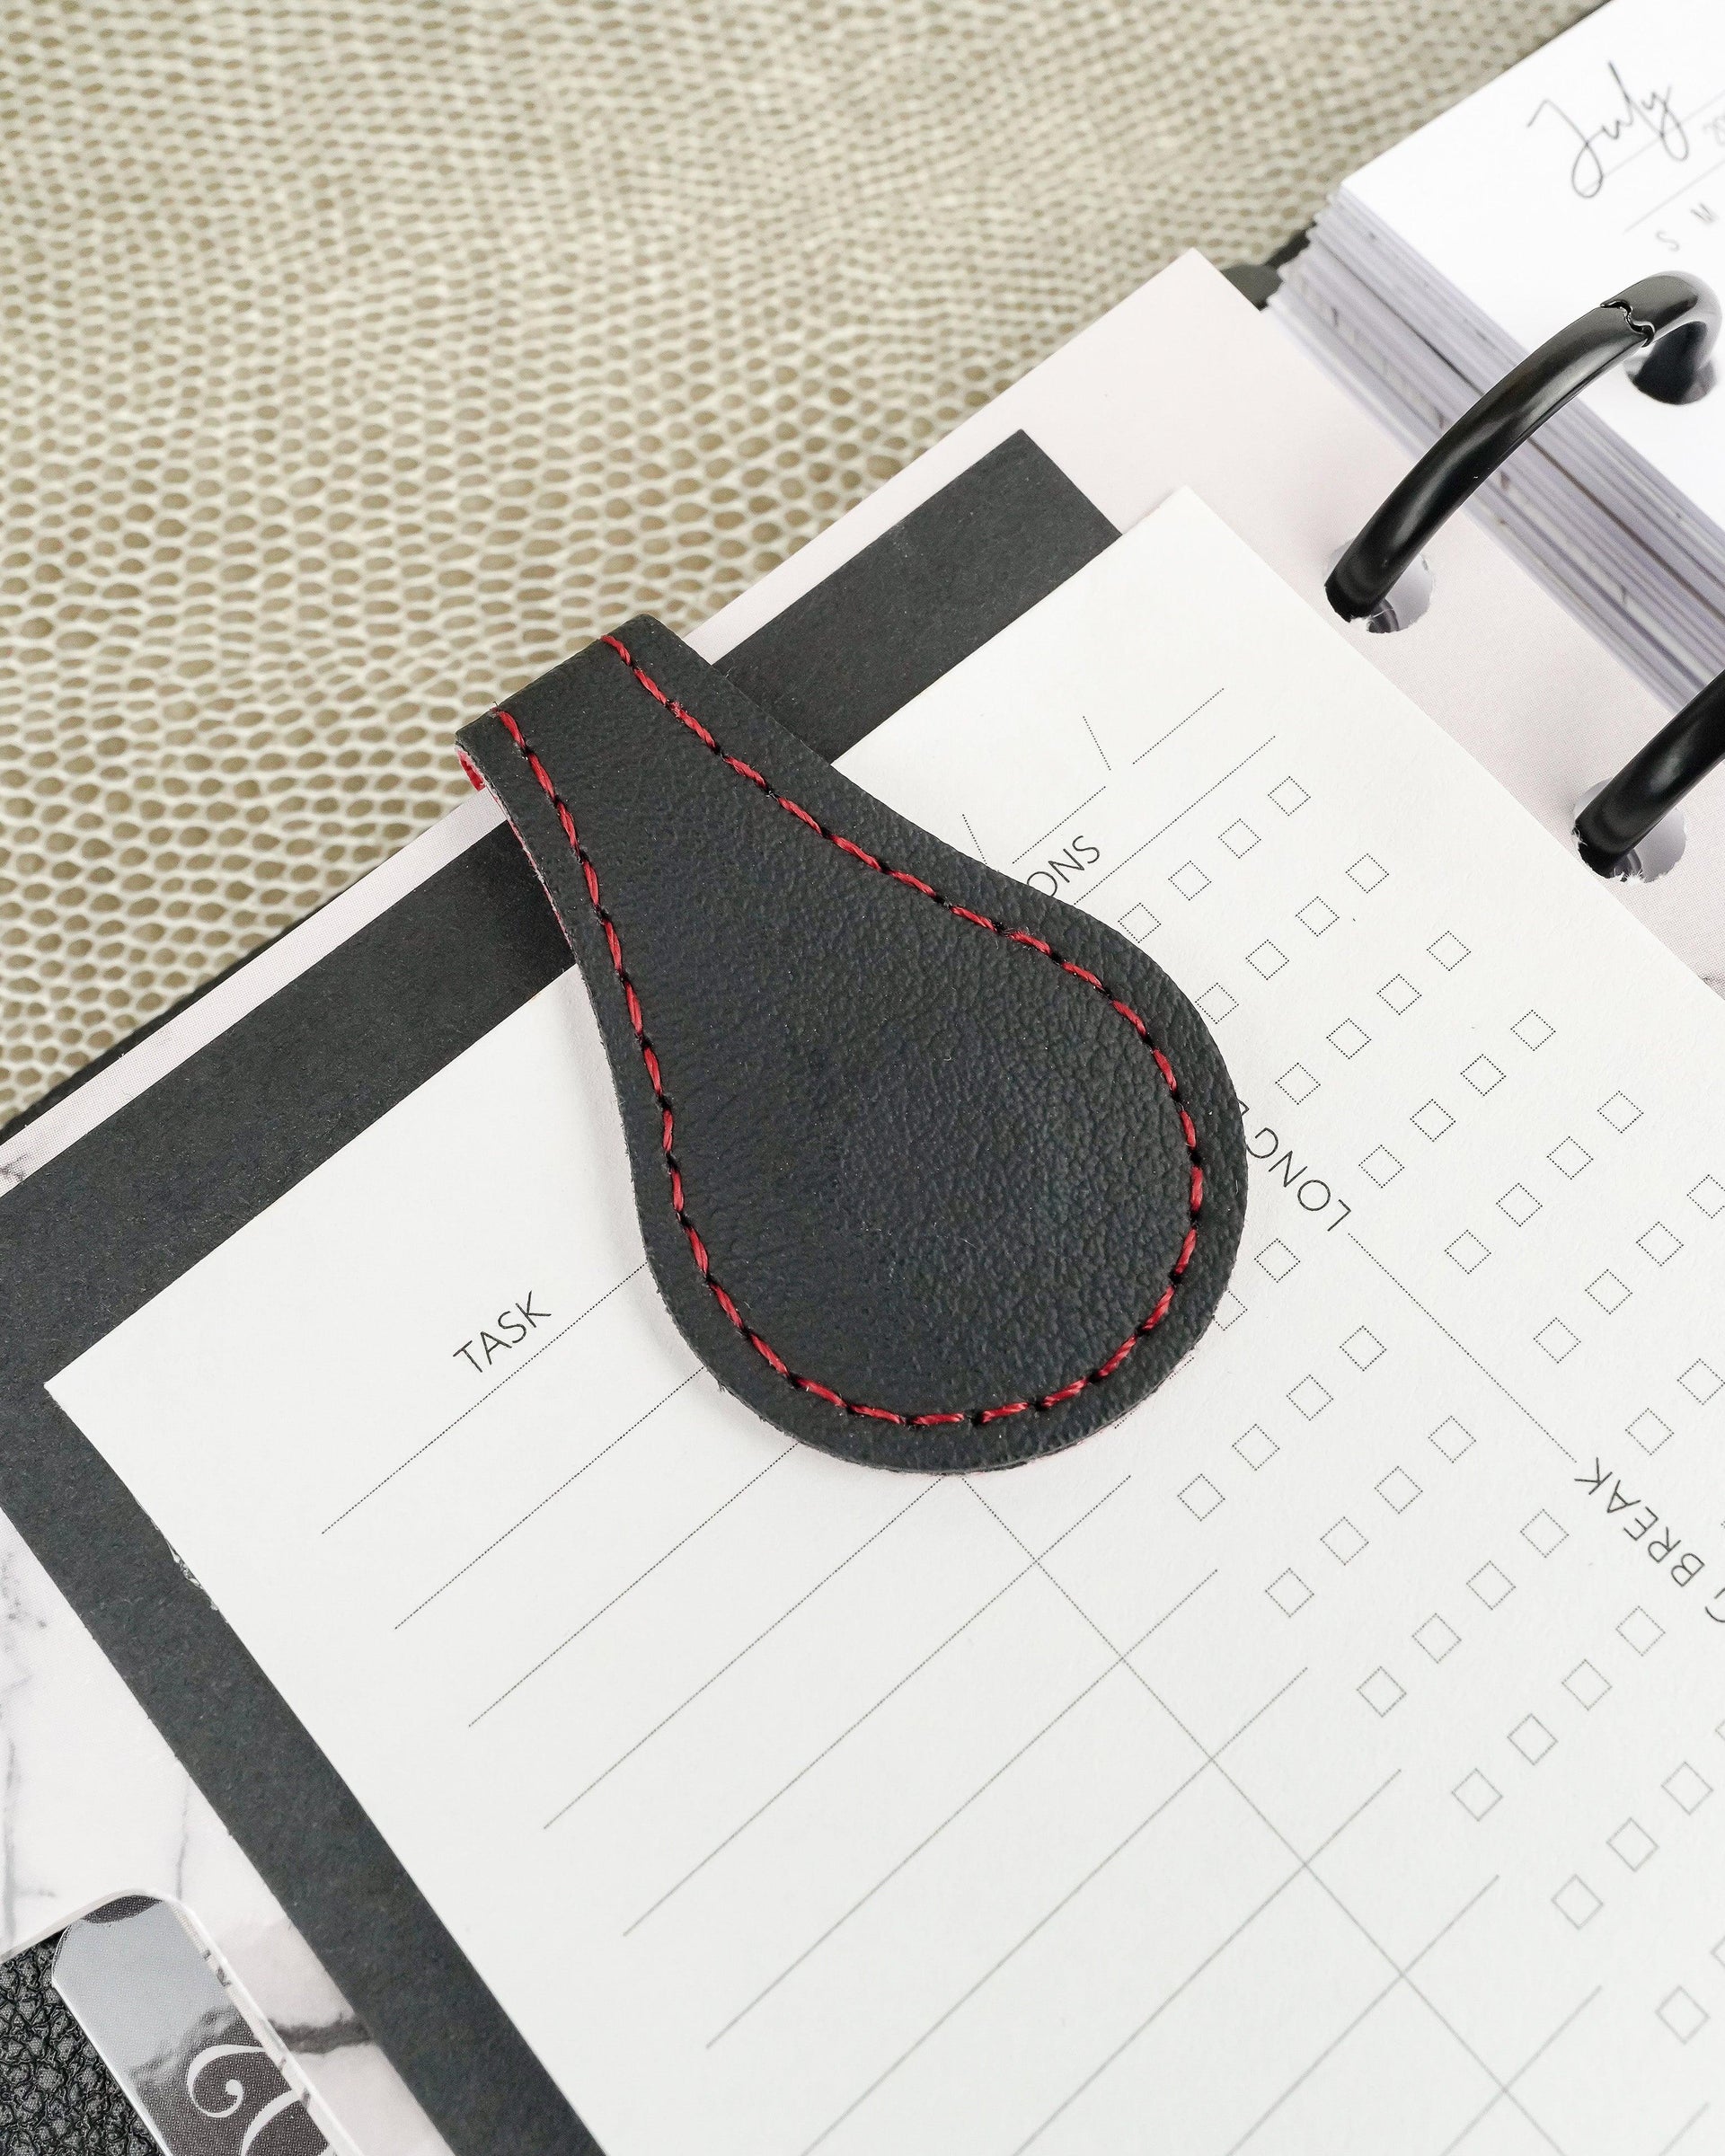 Custom made red bottom magnetic vegan leather planner clip by Jane's Agenda®.